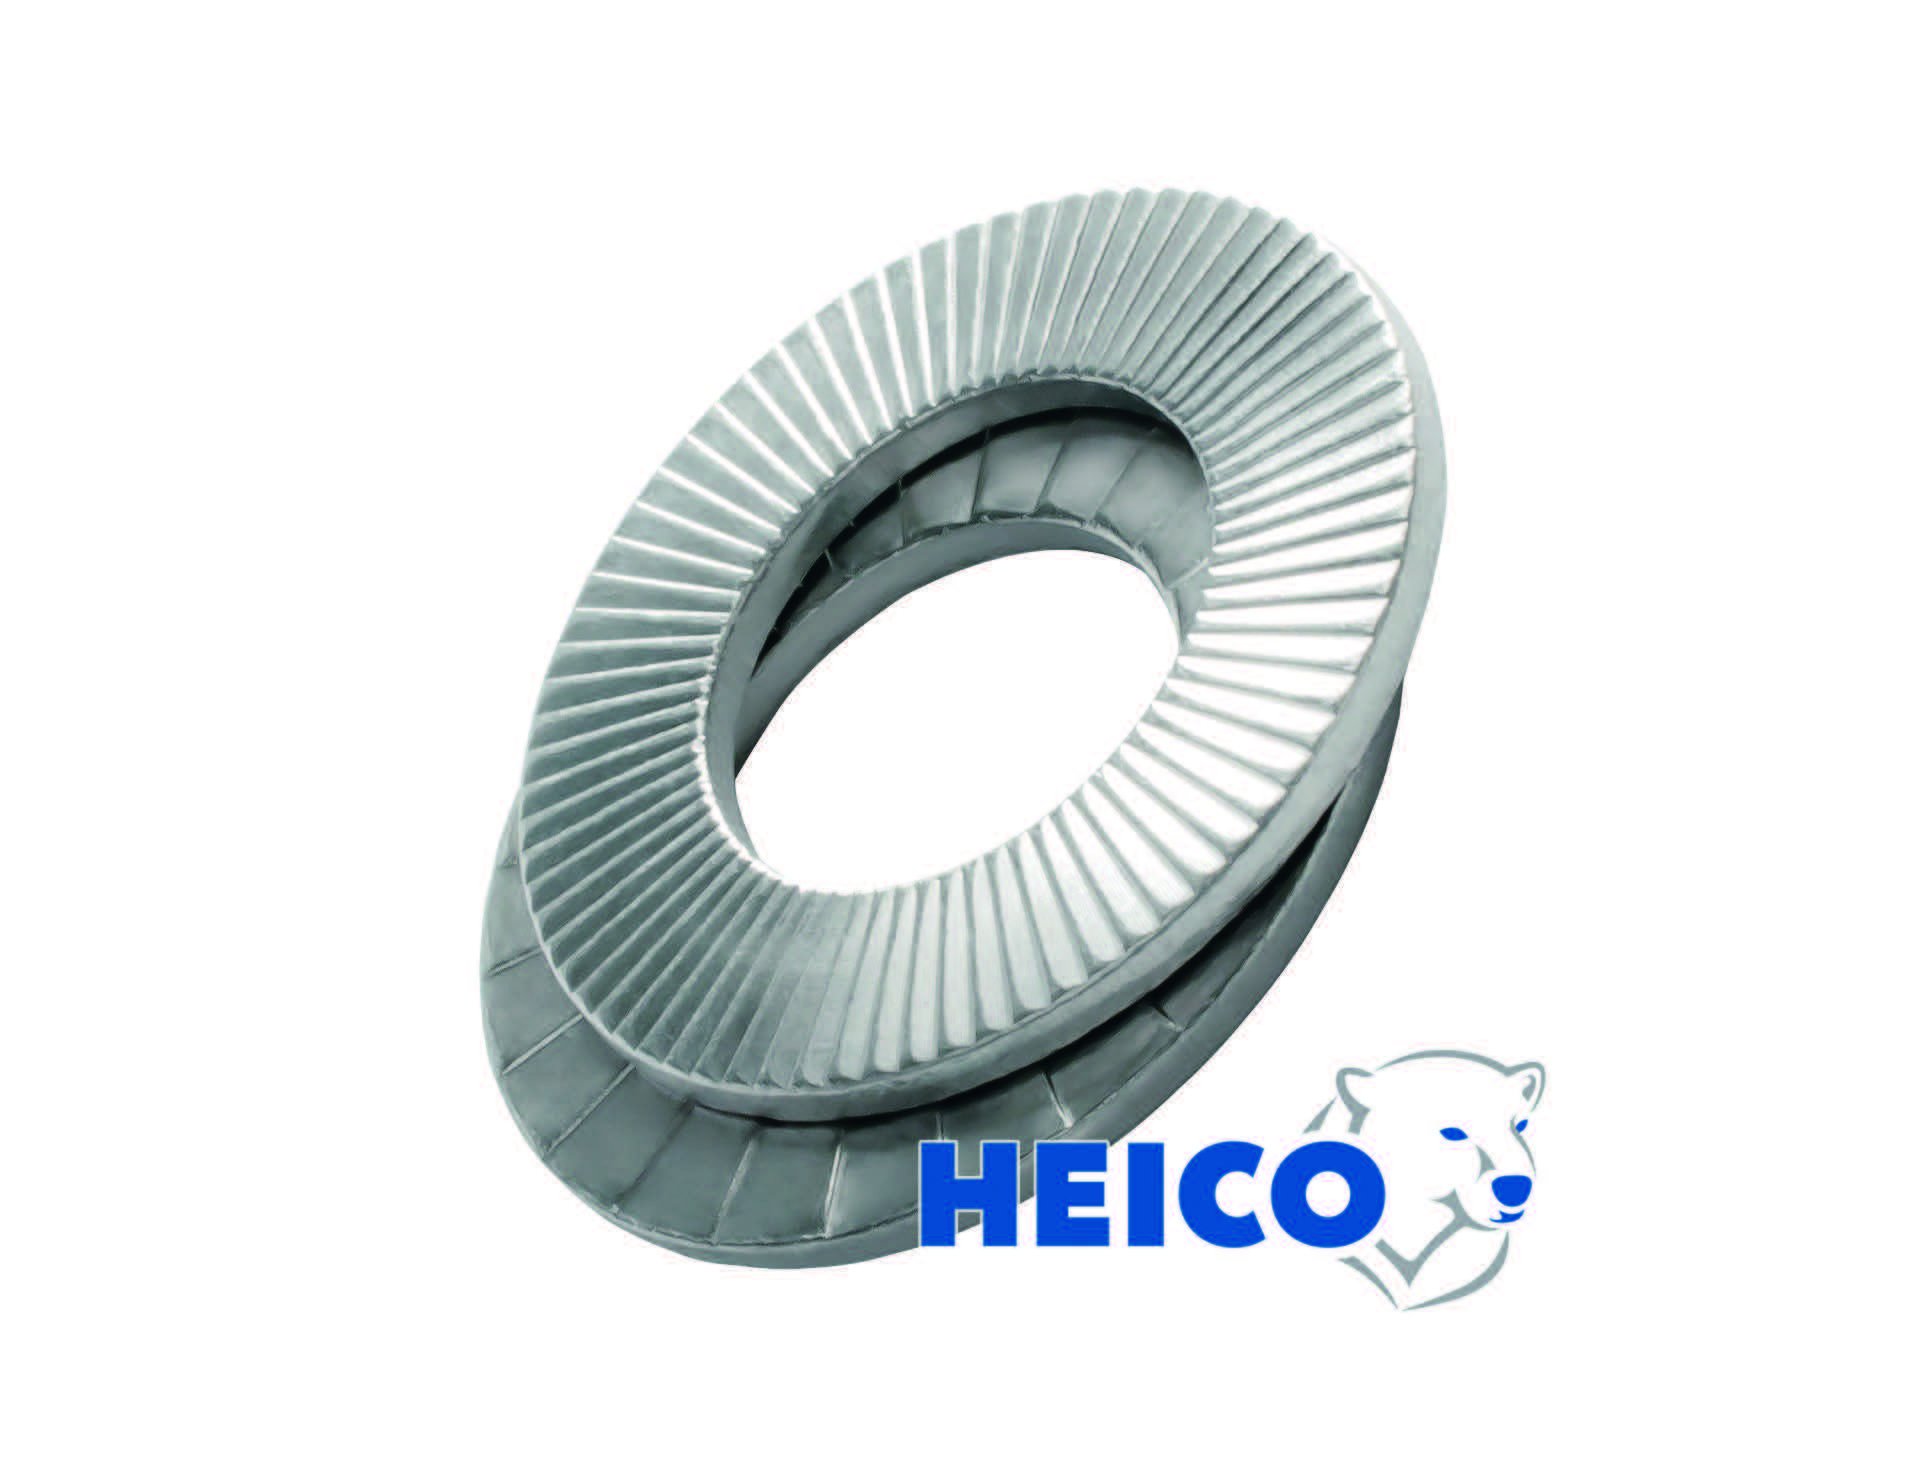 HEICO-LOCK Wedge Lock Washers